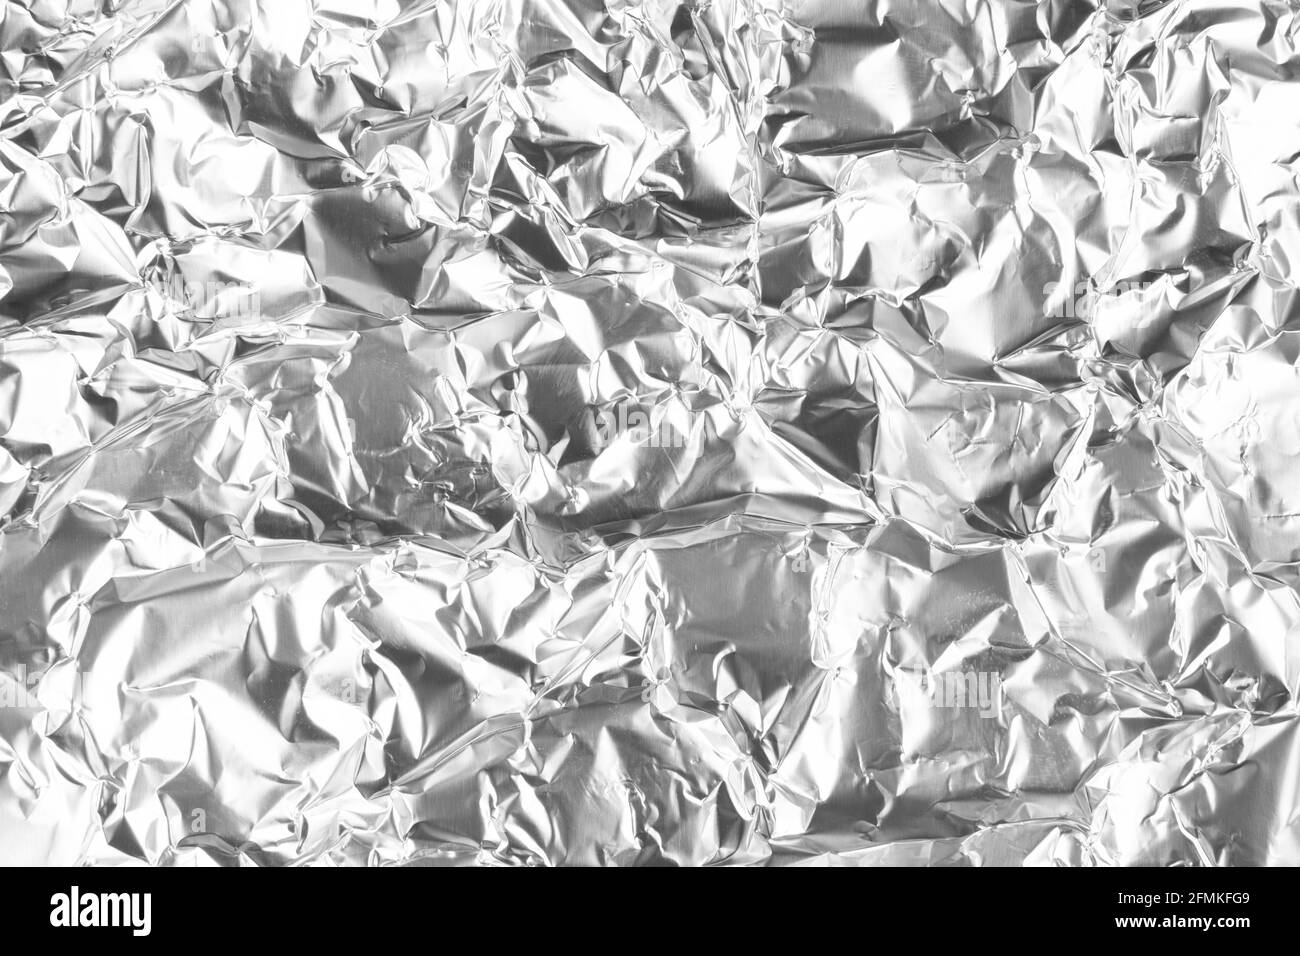 https://c8.alamy.com/comp/2FMKFG9/close-up-of-aluminium-foil-crumpled-silver-aluminium-foil-texture-background-abstract-metallic-paper-pattern-texture-of-crumpled-aluminum-kitchen-f-2FMKFG9.jpg